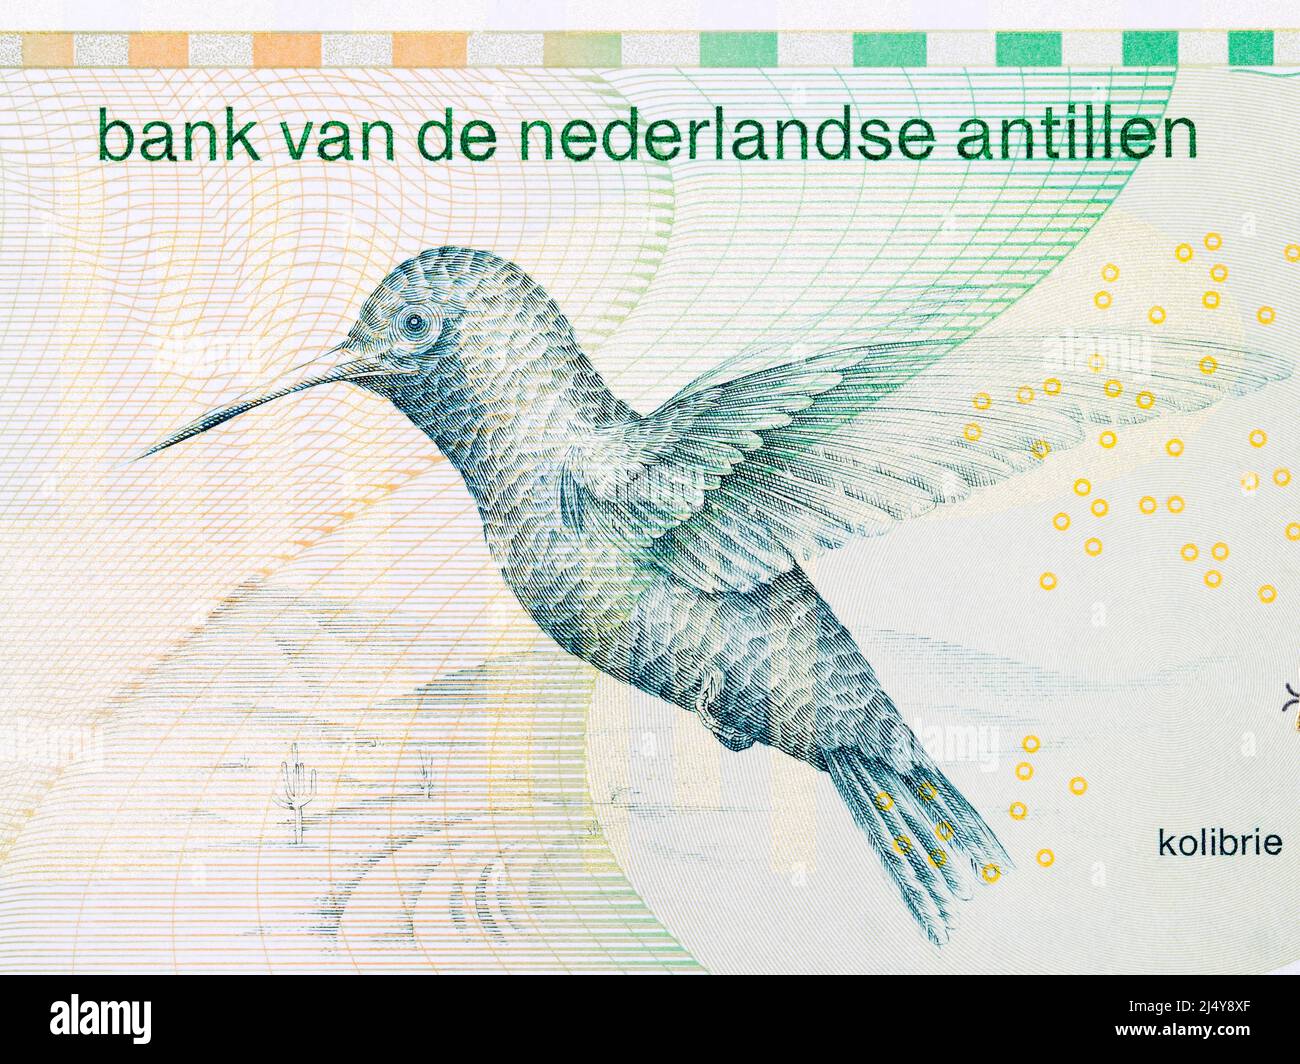 Kolibrie from Netherlands Antillean money - guilder Stock Photo